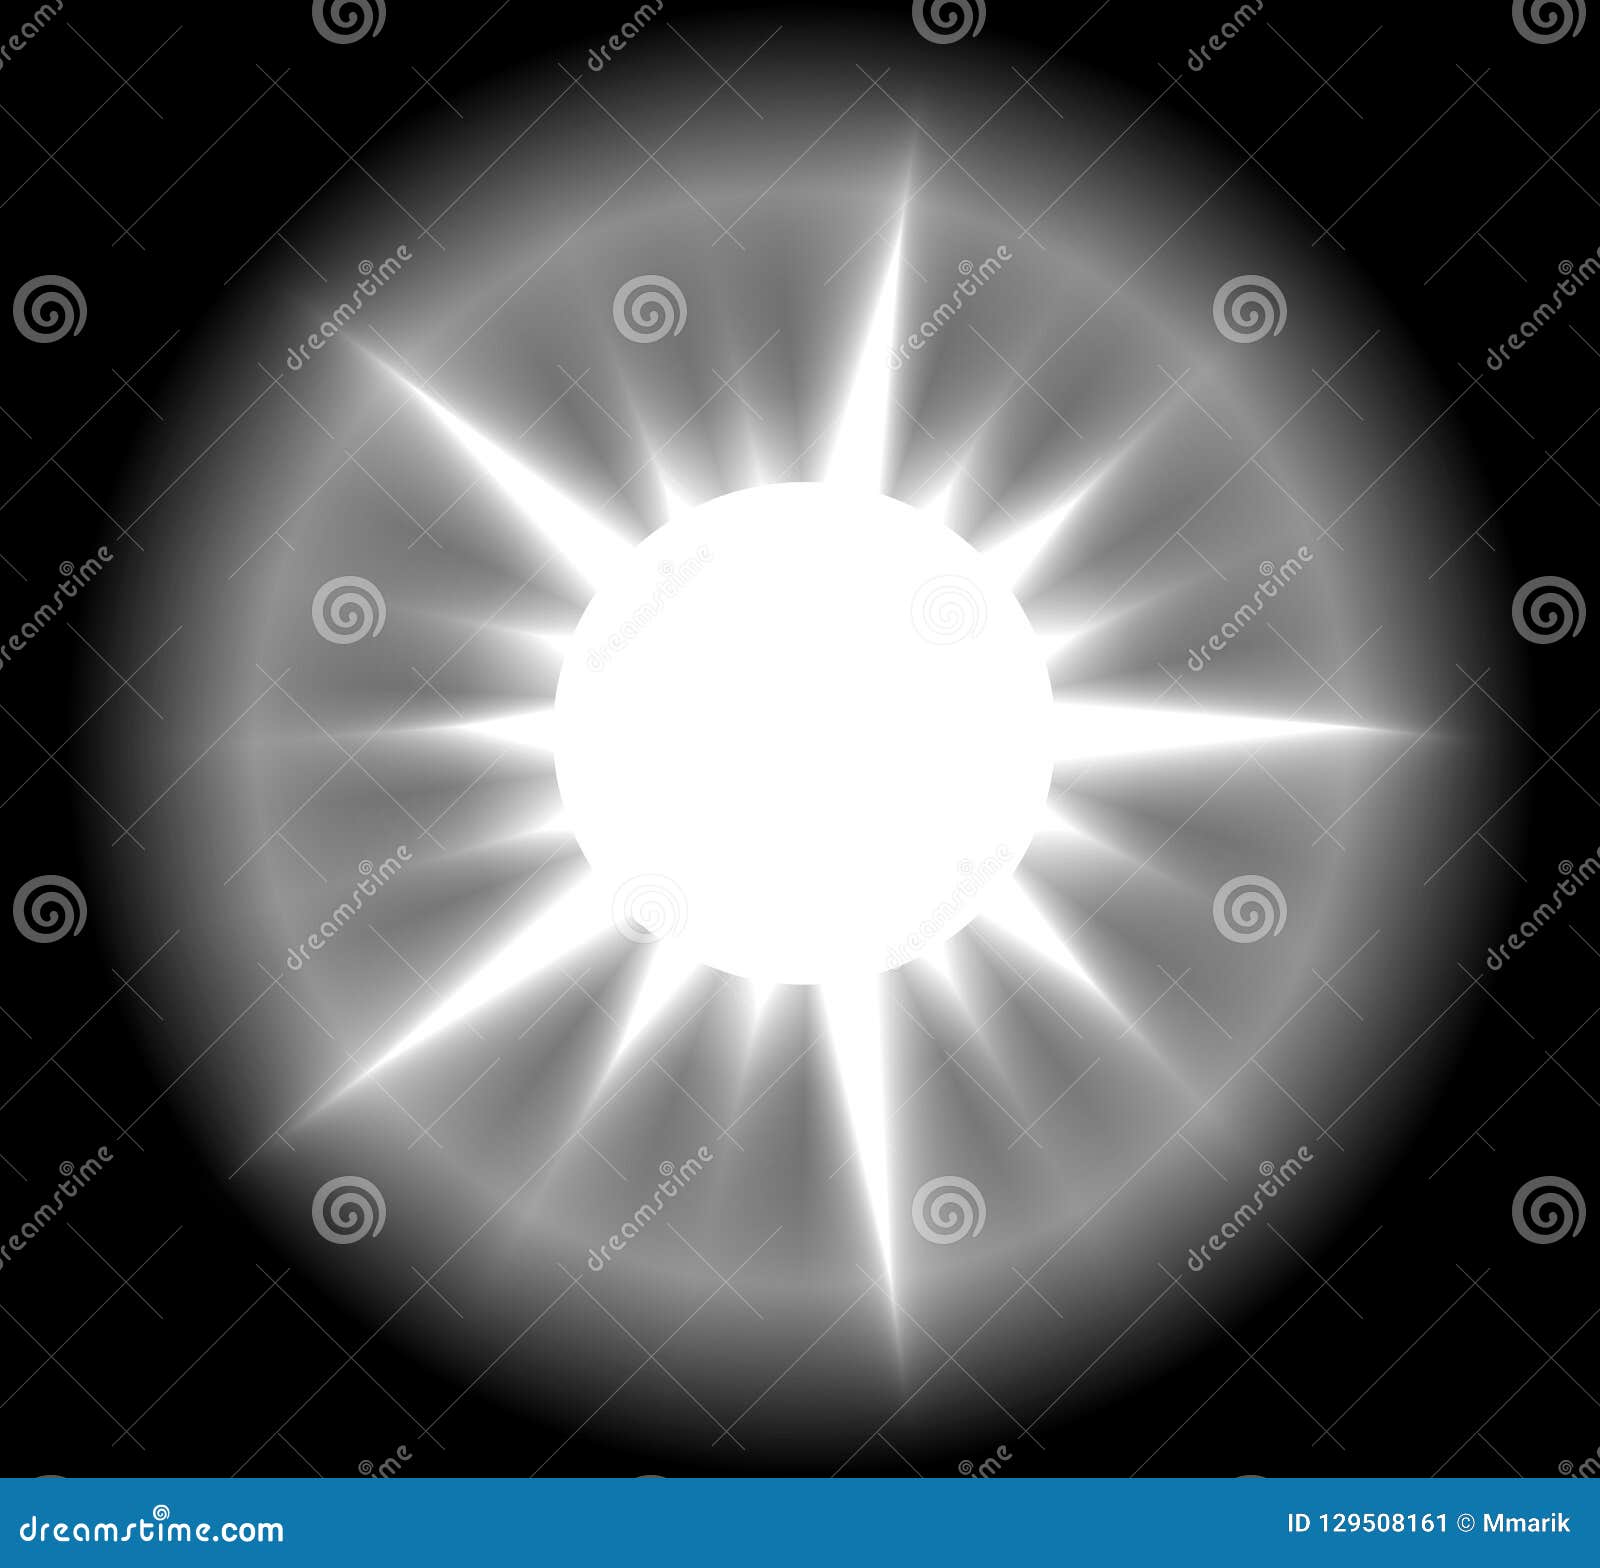 Black and white sun symbol stock vector. Illustration of summer - 129508161